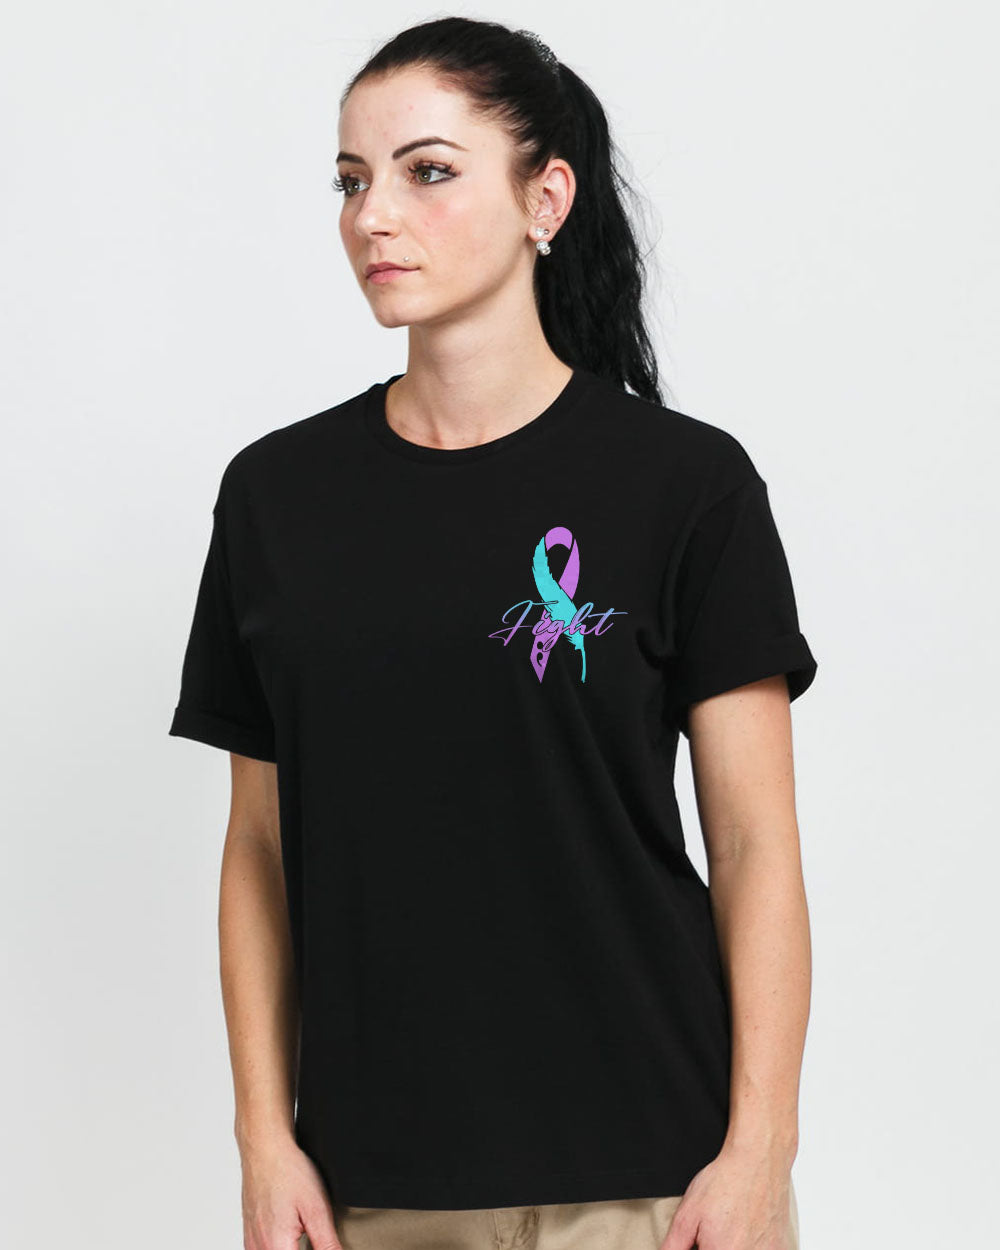 Colorful Ribbon Half Flower Smoke Women's Suicide Prevention Awareness Tshirt